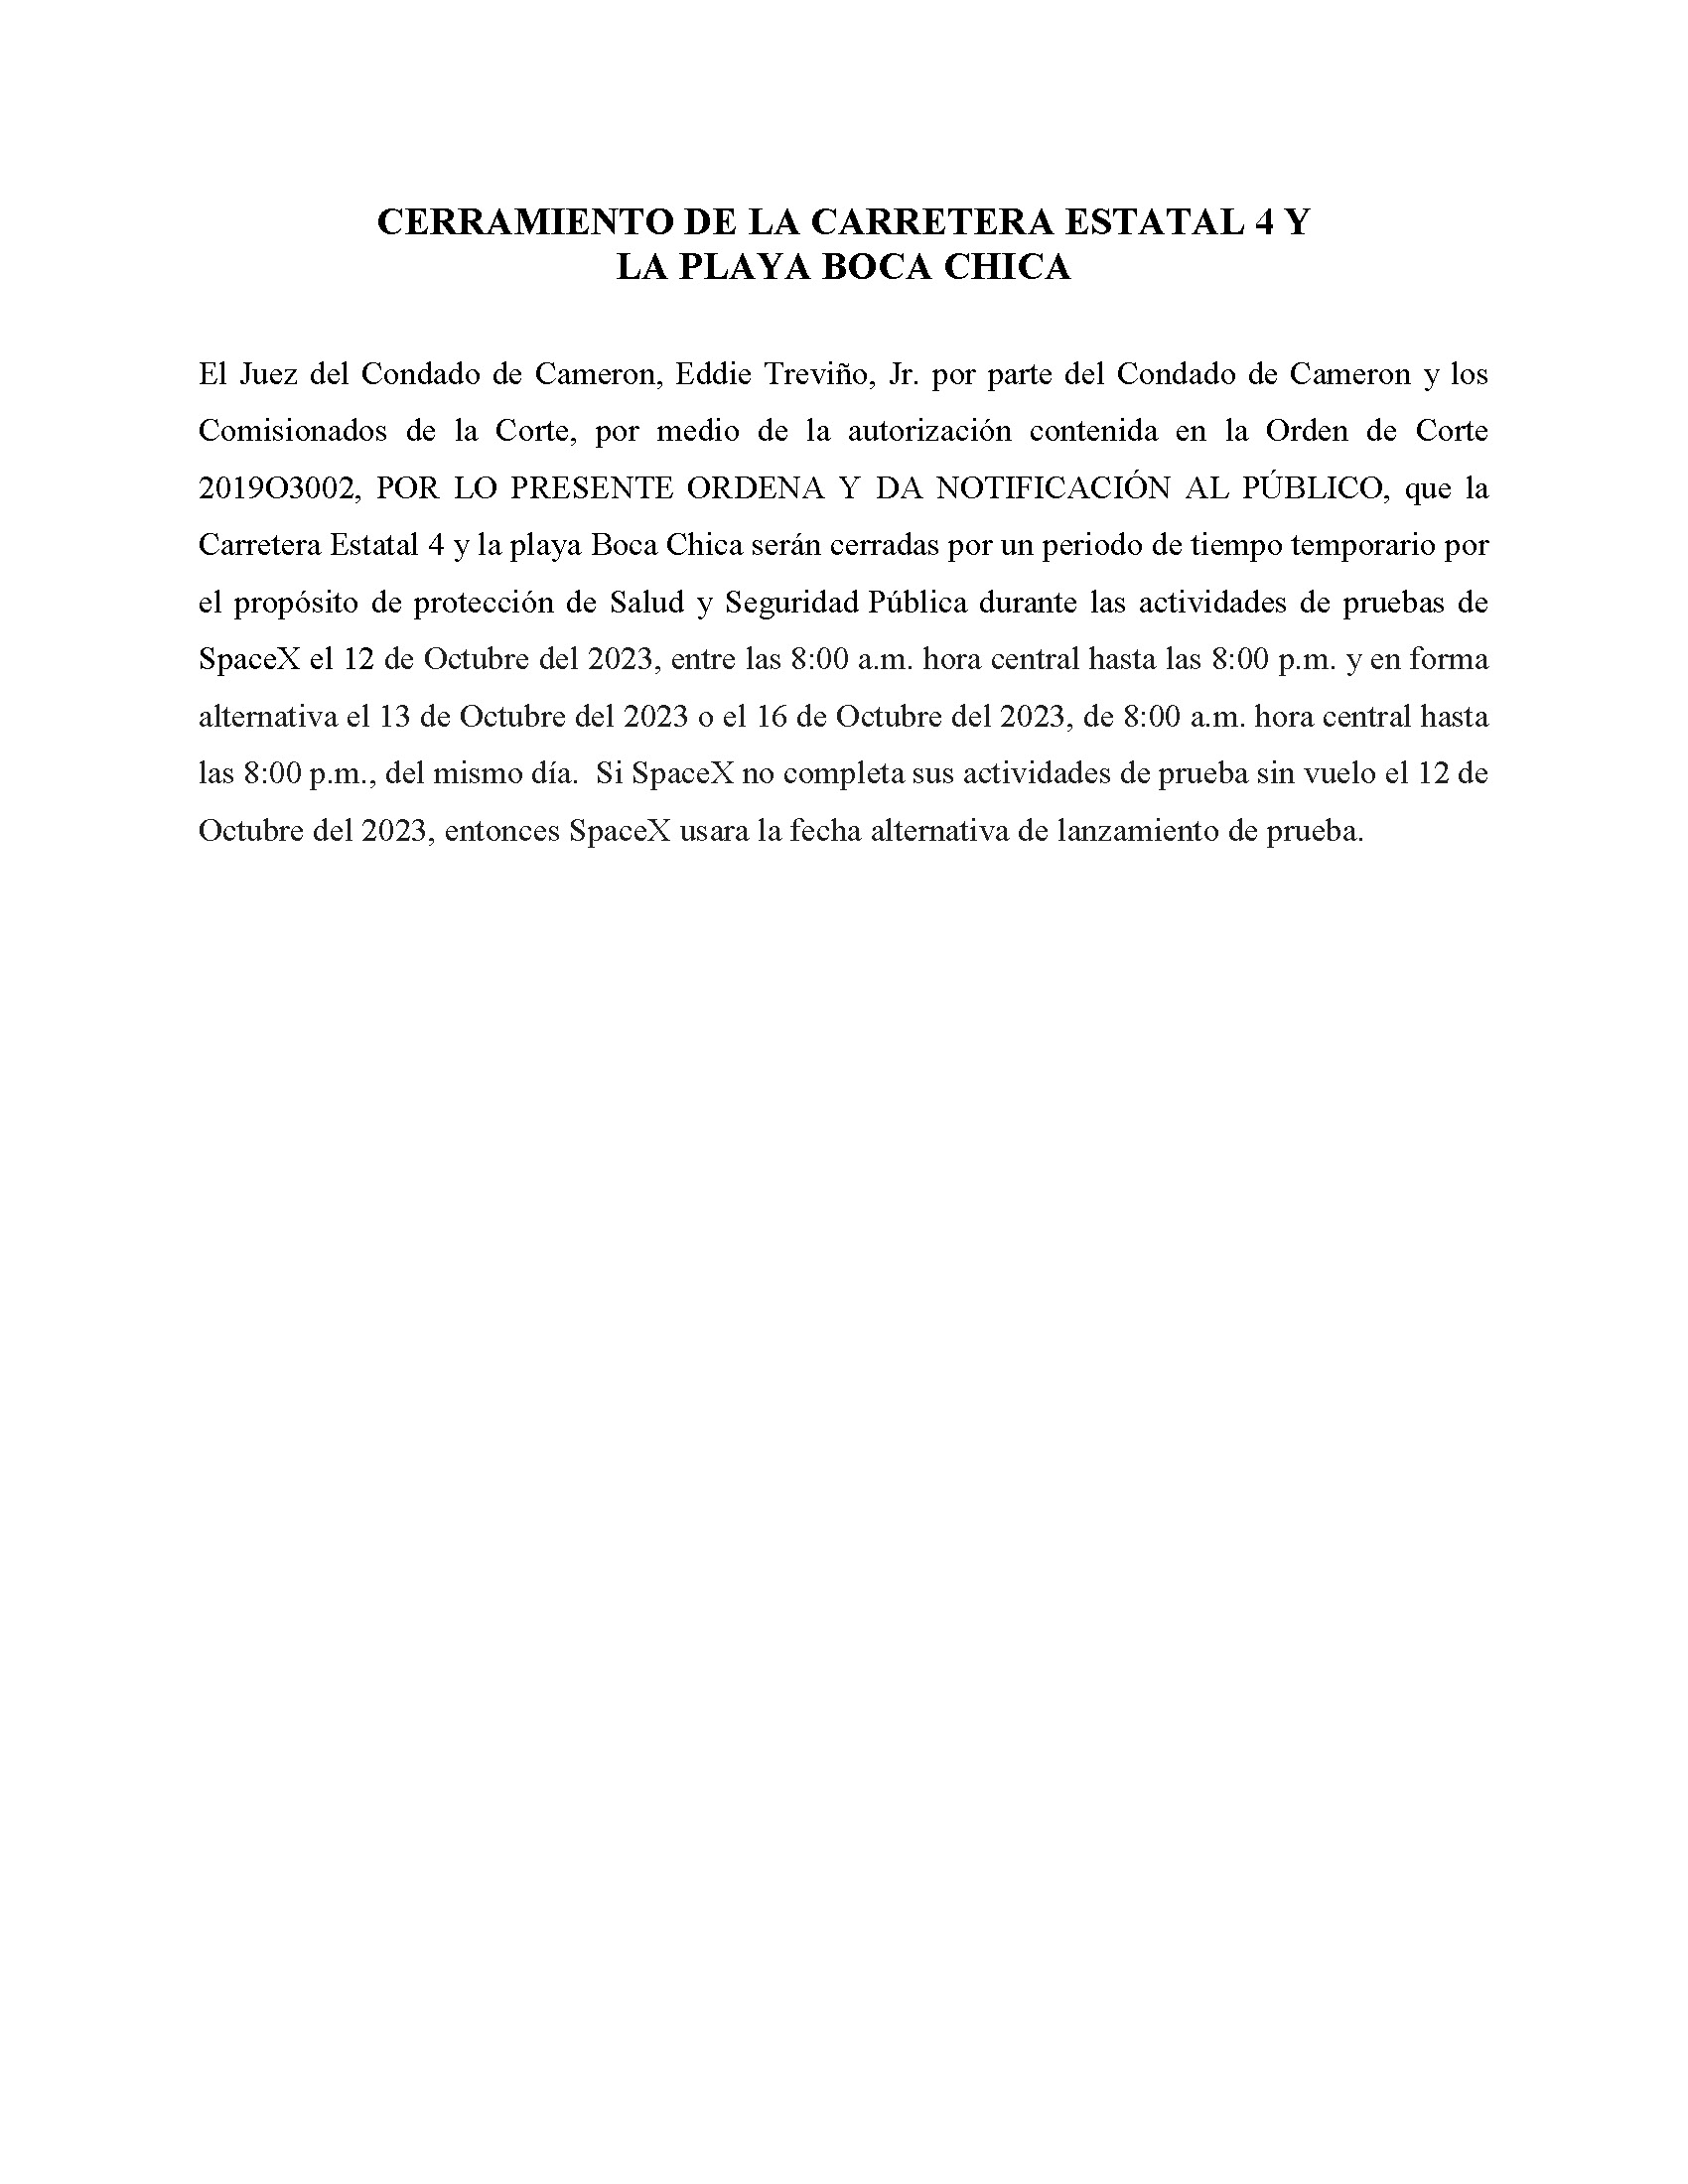 ORDER.CLOSURE OF HIGHWAY 4 Y LA PLAYA BOCA CHICA.SPANISH.10.12.23 002